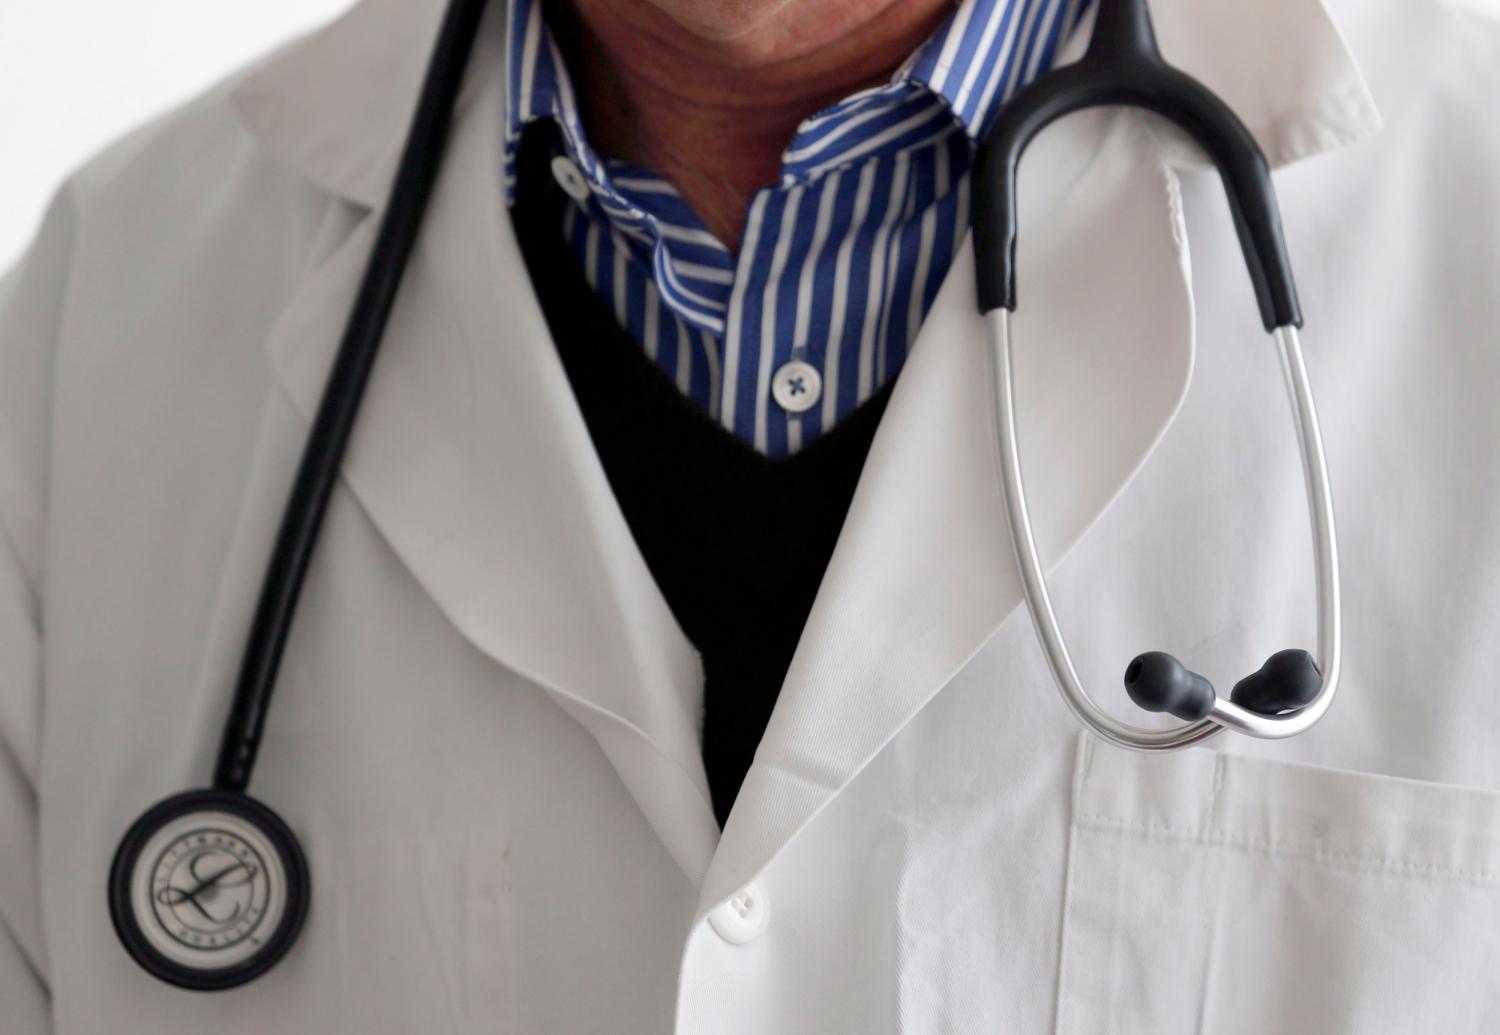 REUTERS/Regis Duvignau - Doctor with a stethoscope